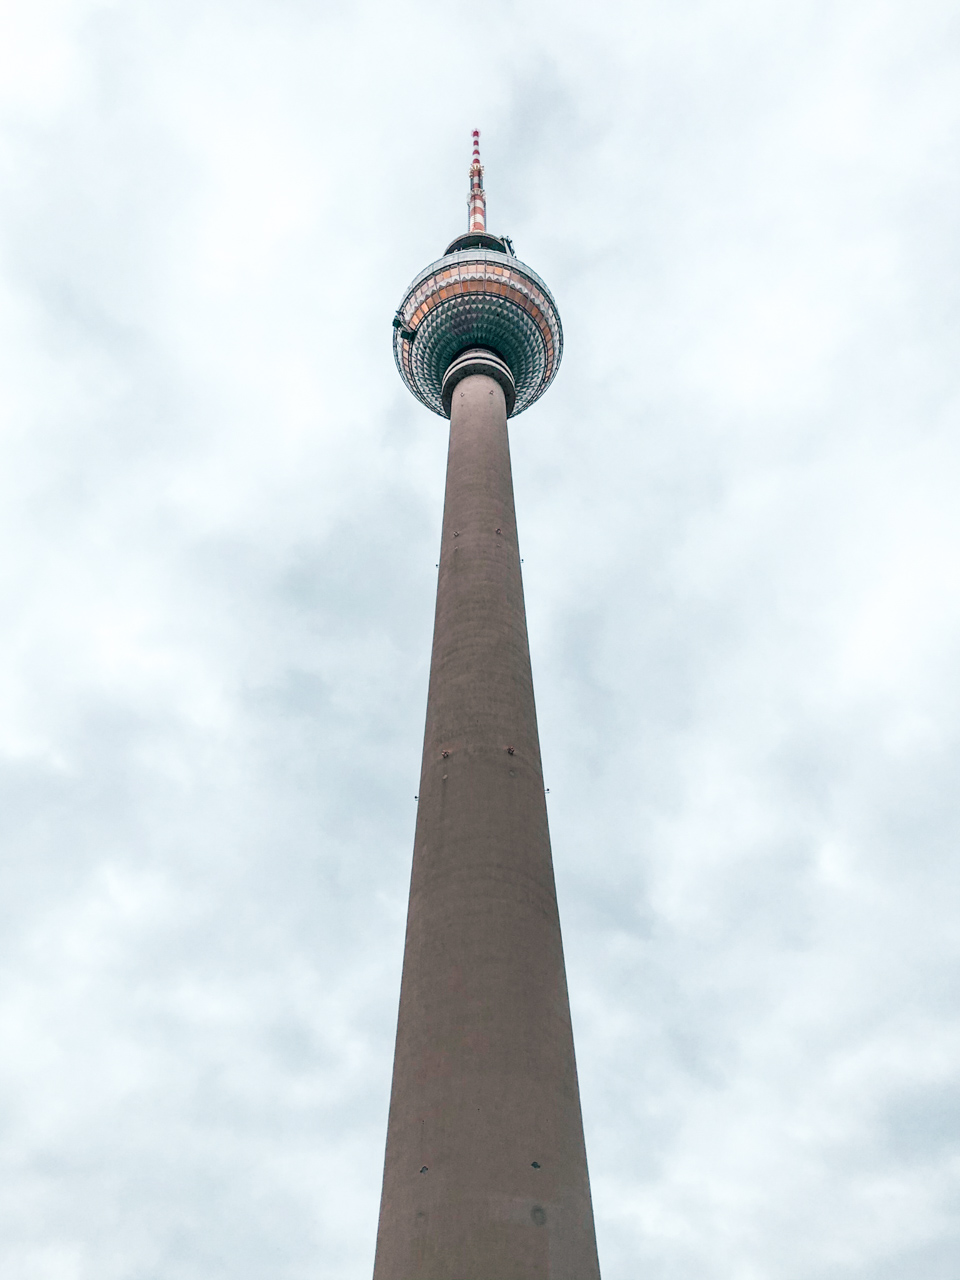 Berliner Fernsehturm (Berlin TV Tower) seen from below during the day